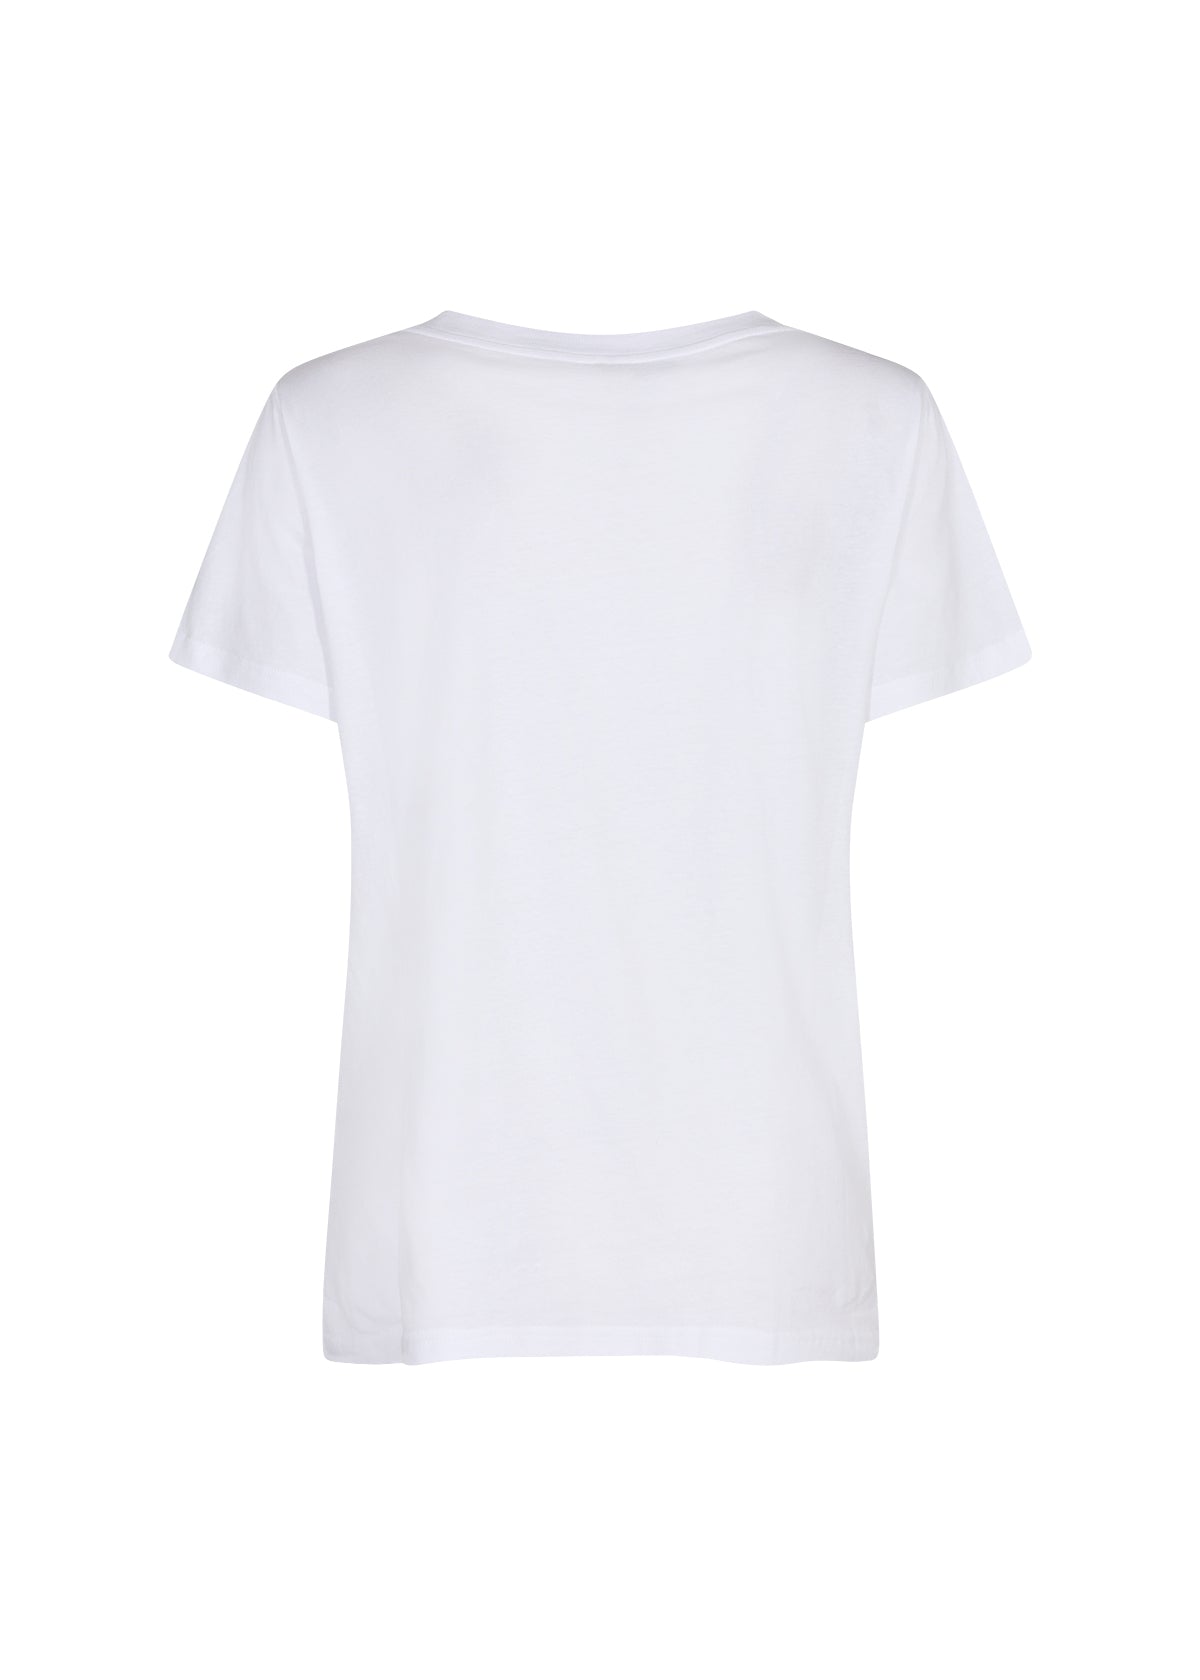 SOYA CONCEPT Derby Crisp White 100% Organic Cotton V Neck T-Shirt